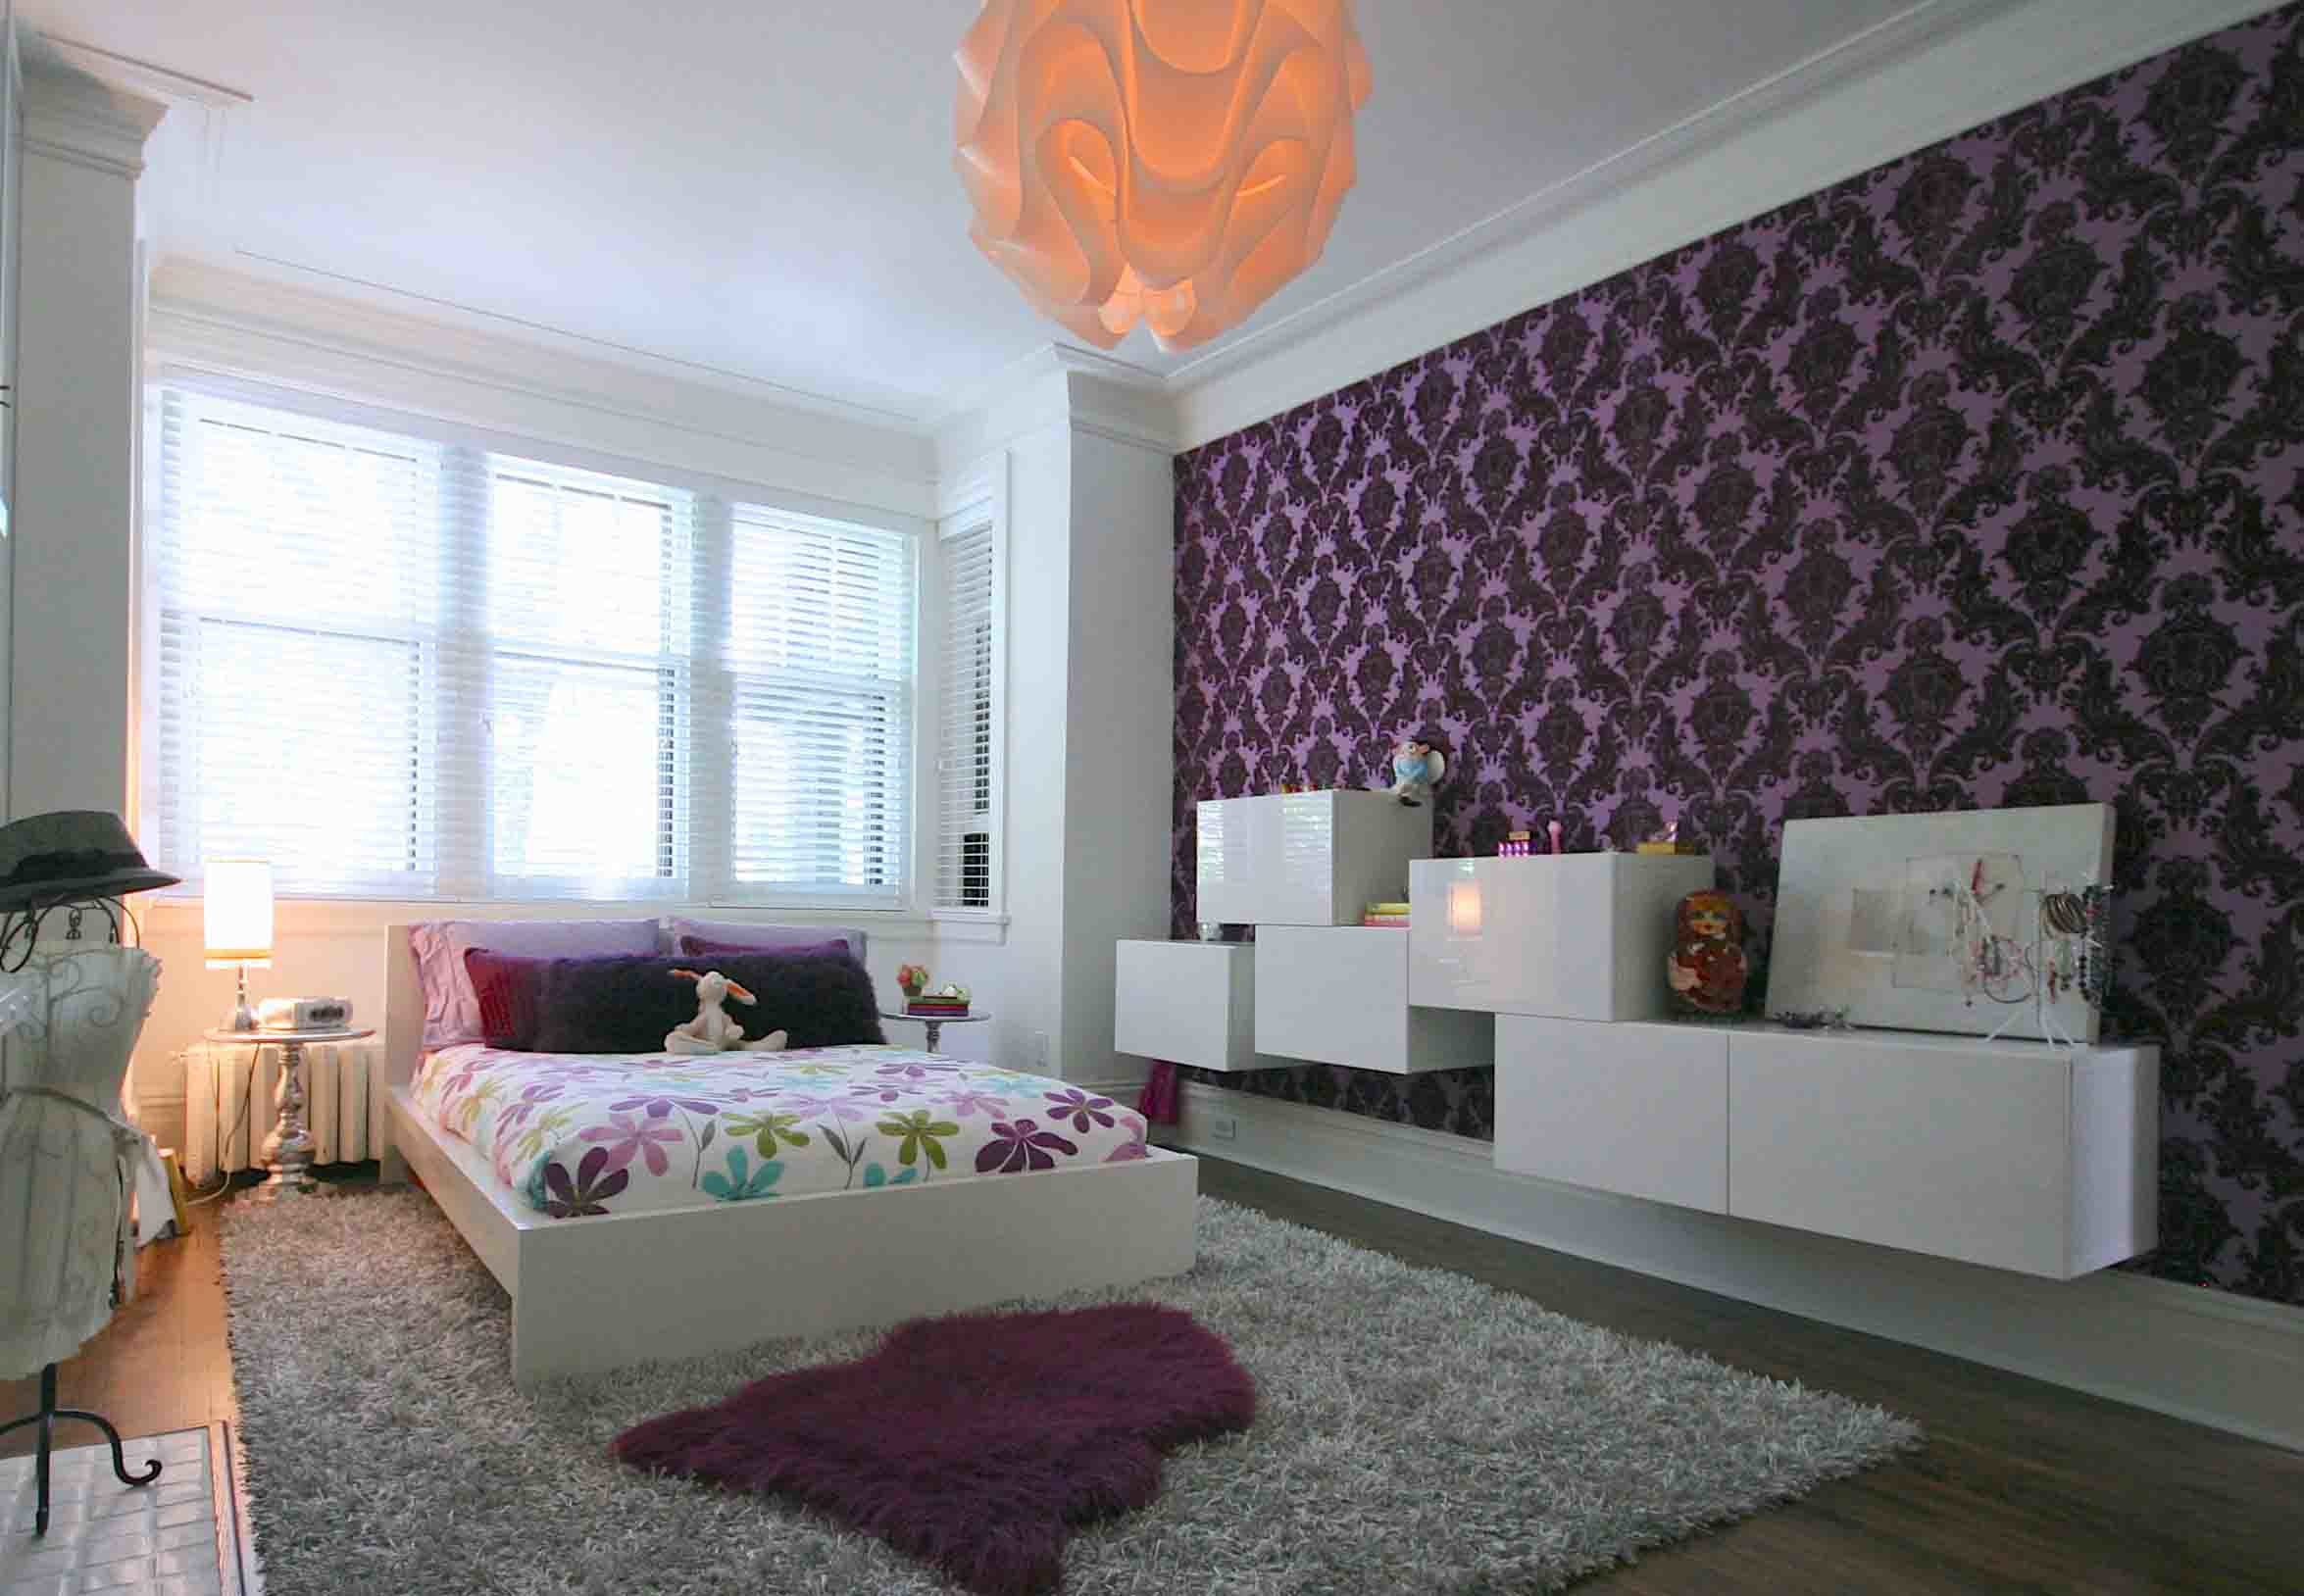 2350x1628 Purple abstract bedroom wallpaper idea